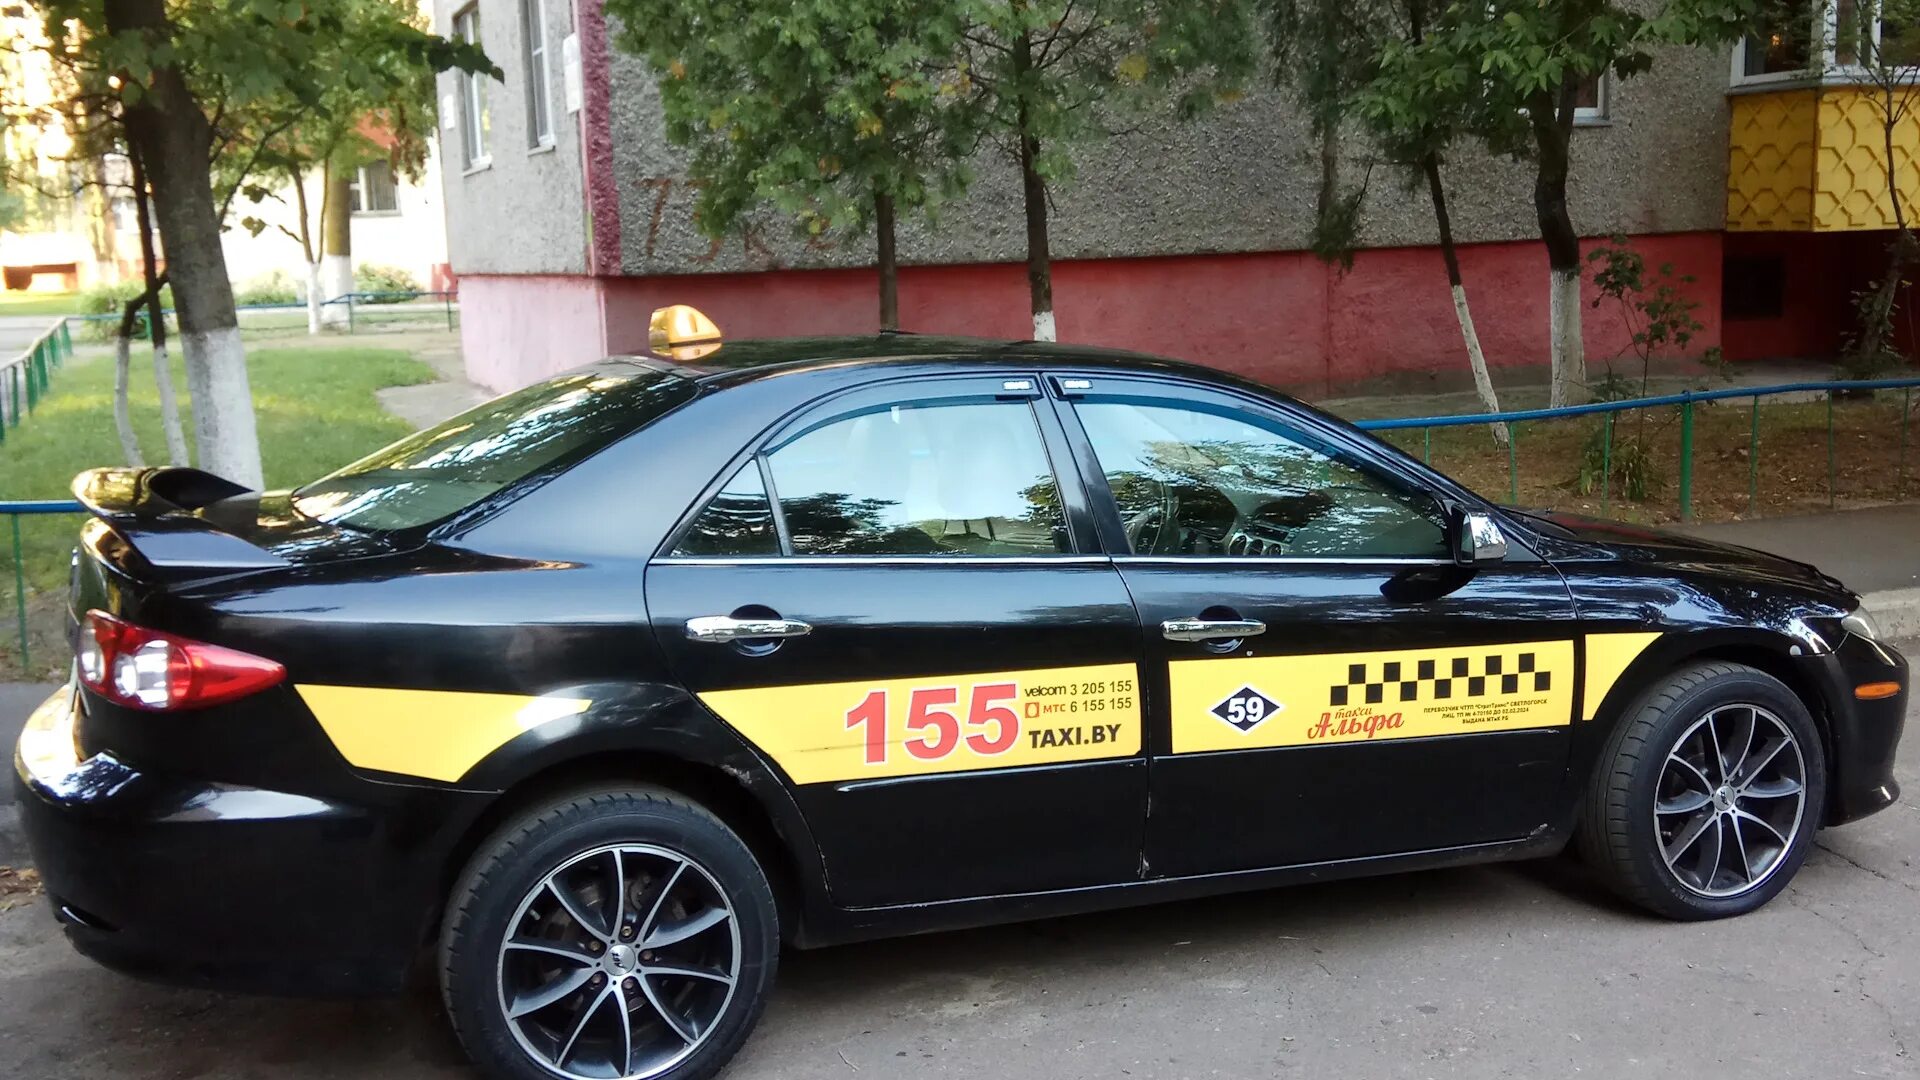 Всего 15 такси 6 желтых. БМВ х6 такси. Audi a6 такси. Audi b6 такси.